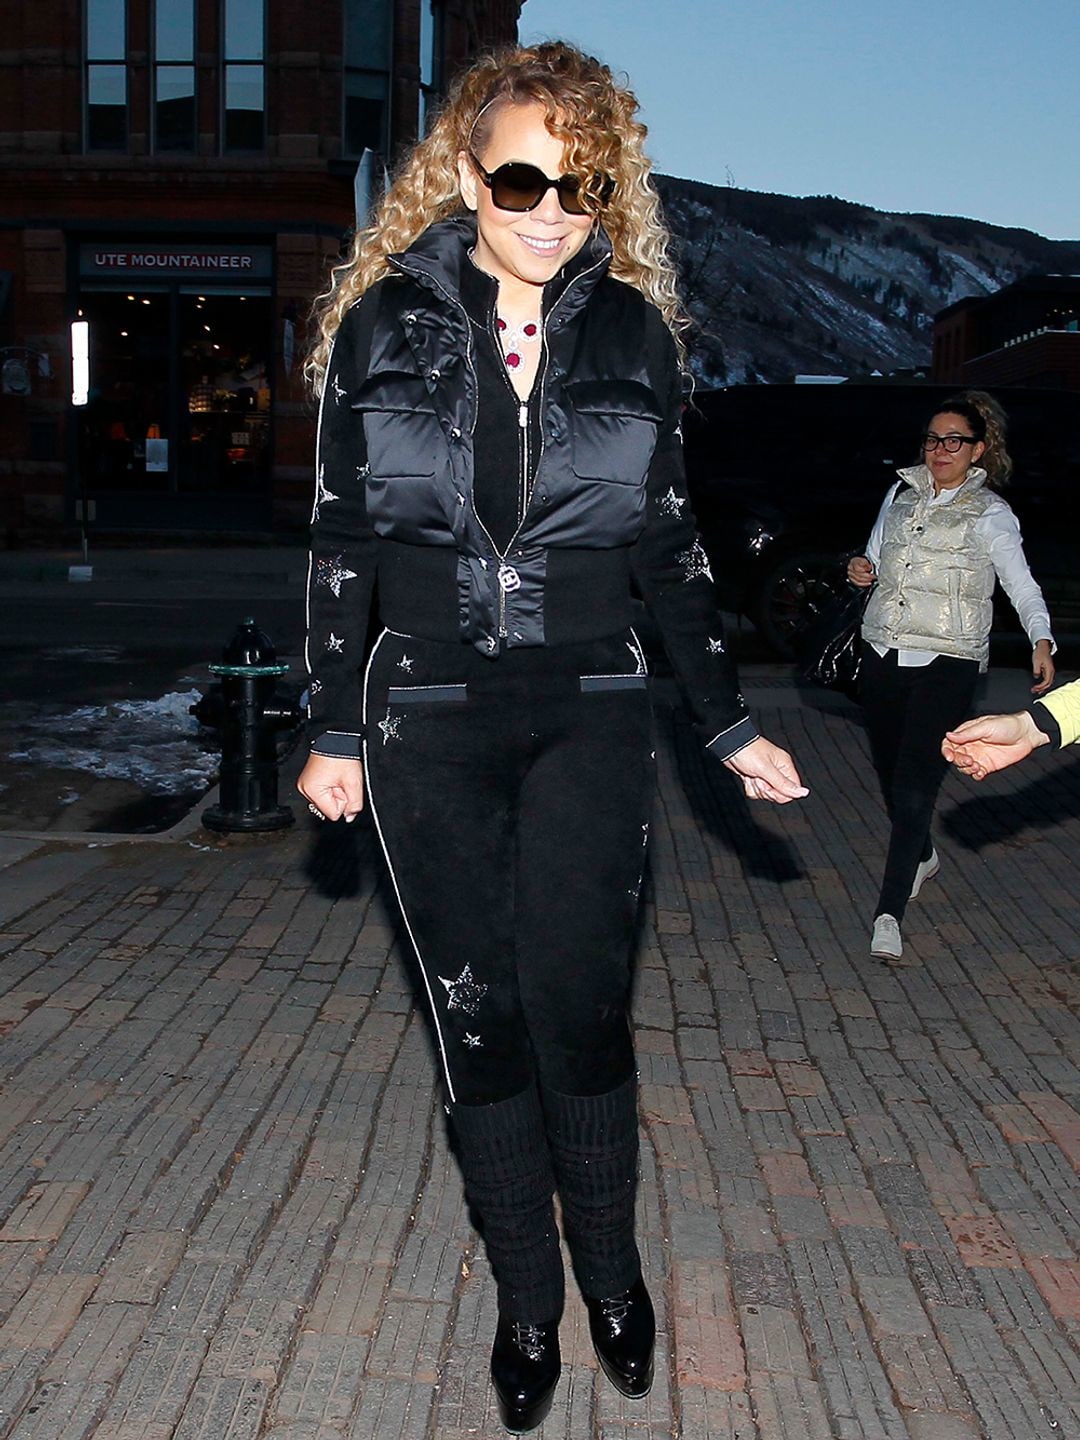 Mariah Carey enjoying a shopping spree in Aspen